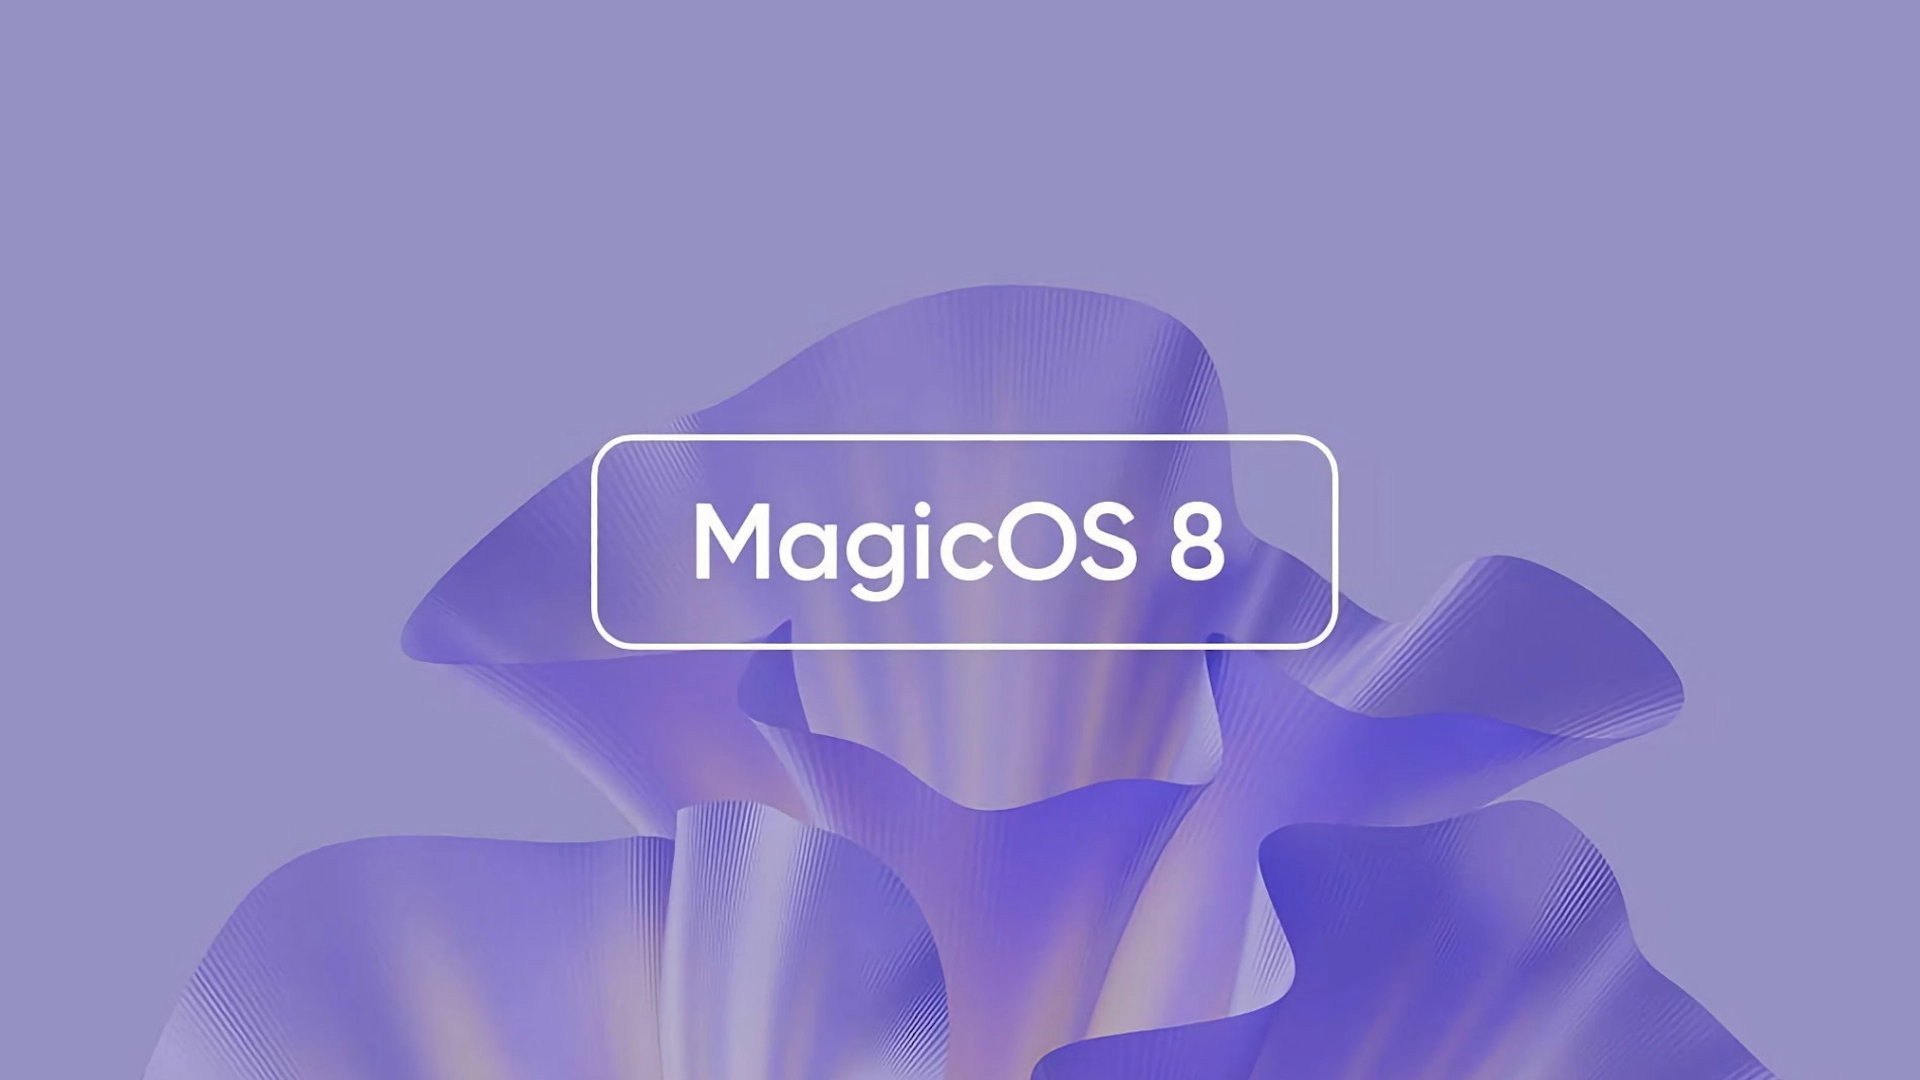 Honor starts testing MagicOS 8 software